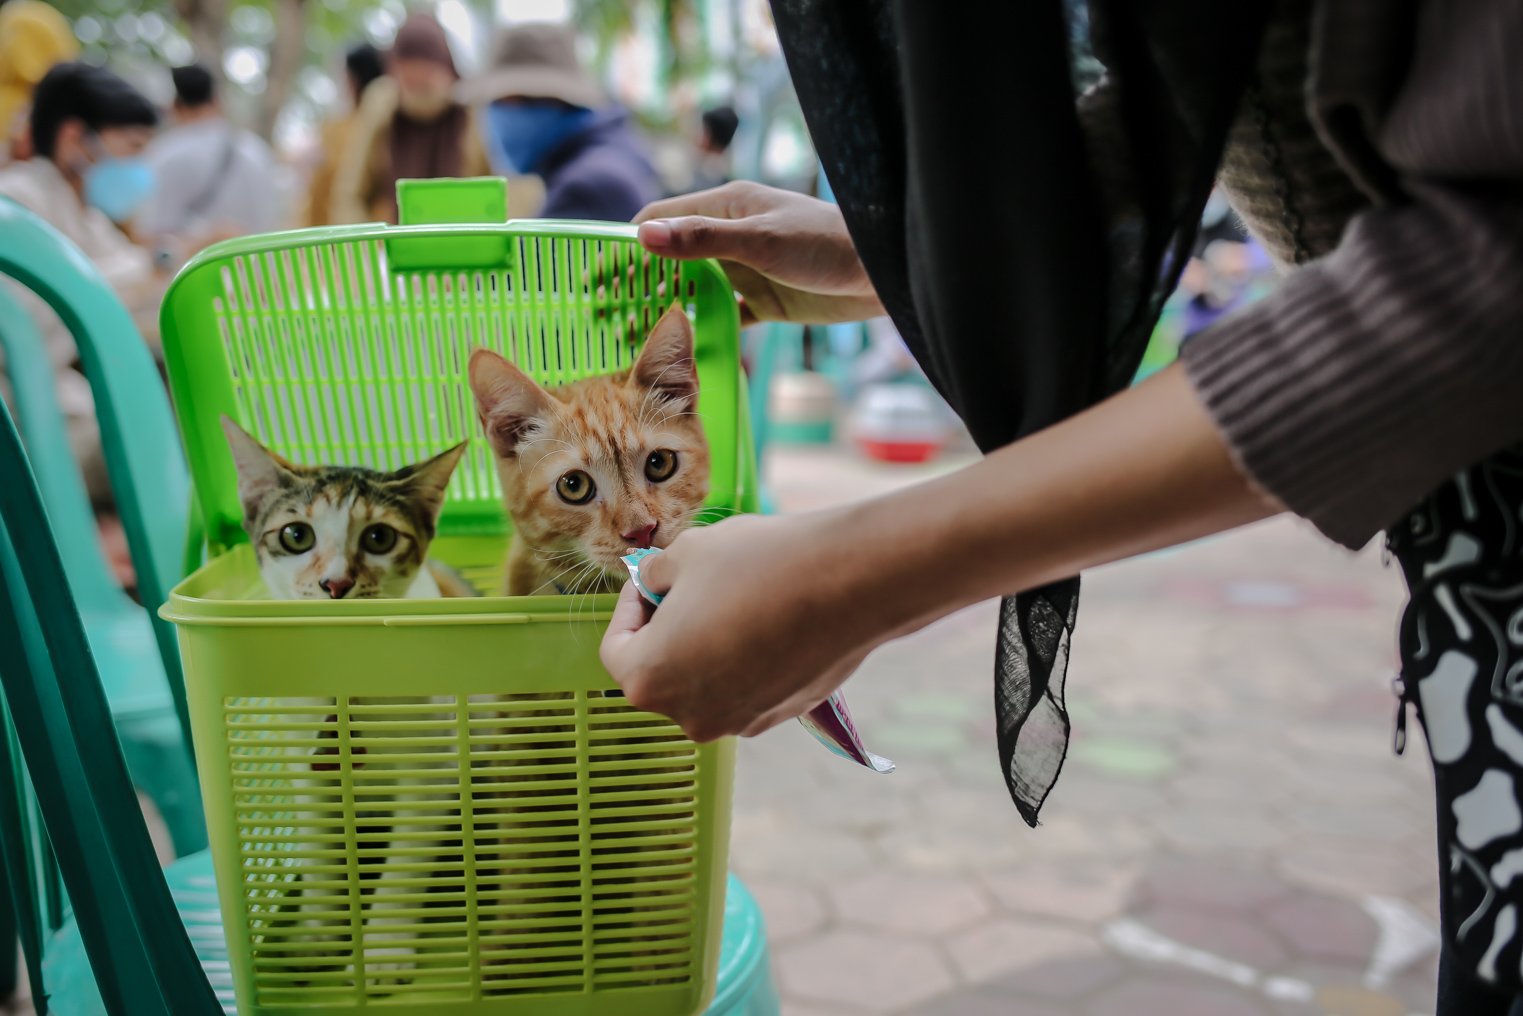 Sejumlah warga memberikan makan kucing peliharaannya saat megantre untuk mendapatkan vaksin rabies yang digelar Suku Dinas Ketahanan Pangan, Kelautan, dan Pertanian (KPKP) Jakarta Selatan pada kucing peliharaan milik warga di Kantor Kelurahan Kebon Baru, Jakarta, Selasa (16/11/2021). Sudin KPKP Kota Administrasi Jakarta Selatan Kecamatan Tebet menyediakan sebanyak 250 dosis vaksin rabies dalam kegiatan vaksinasi gratis tersebut.